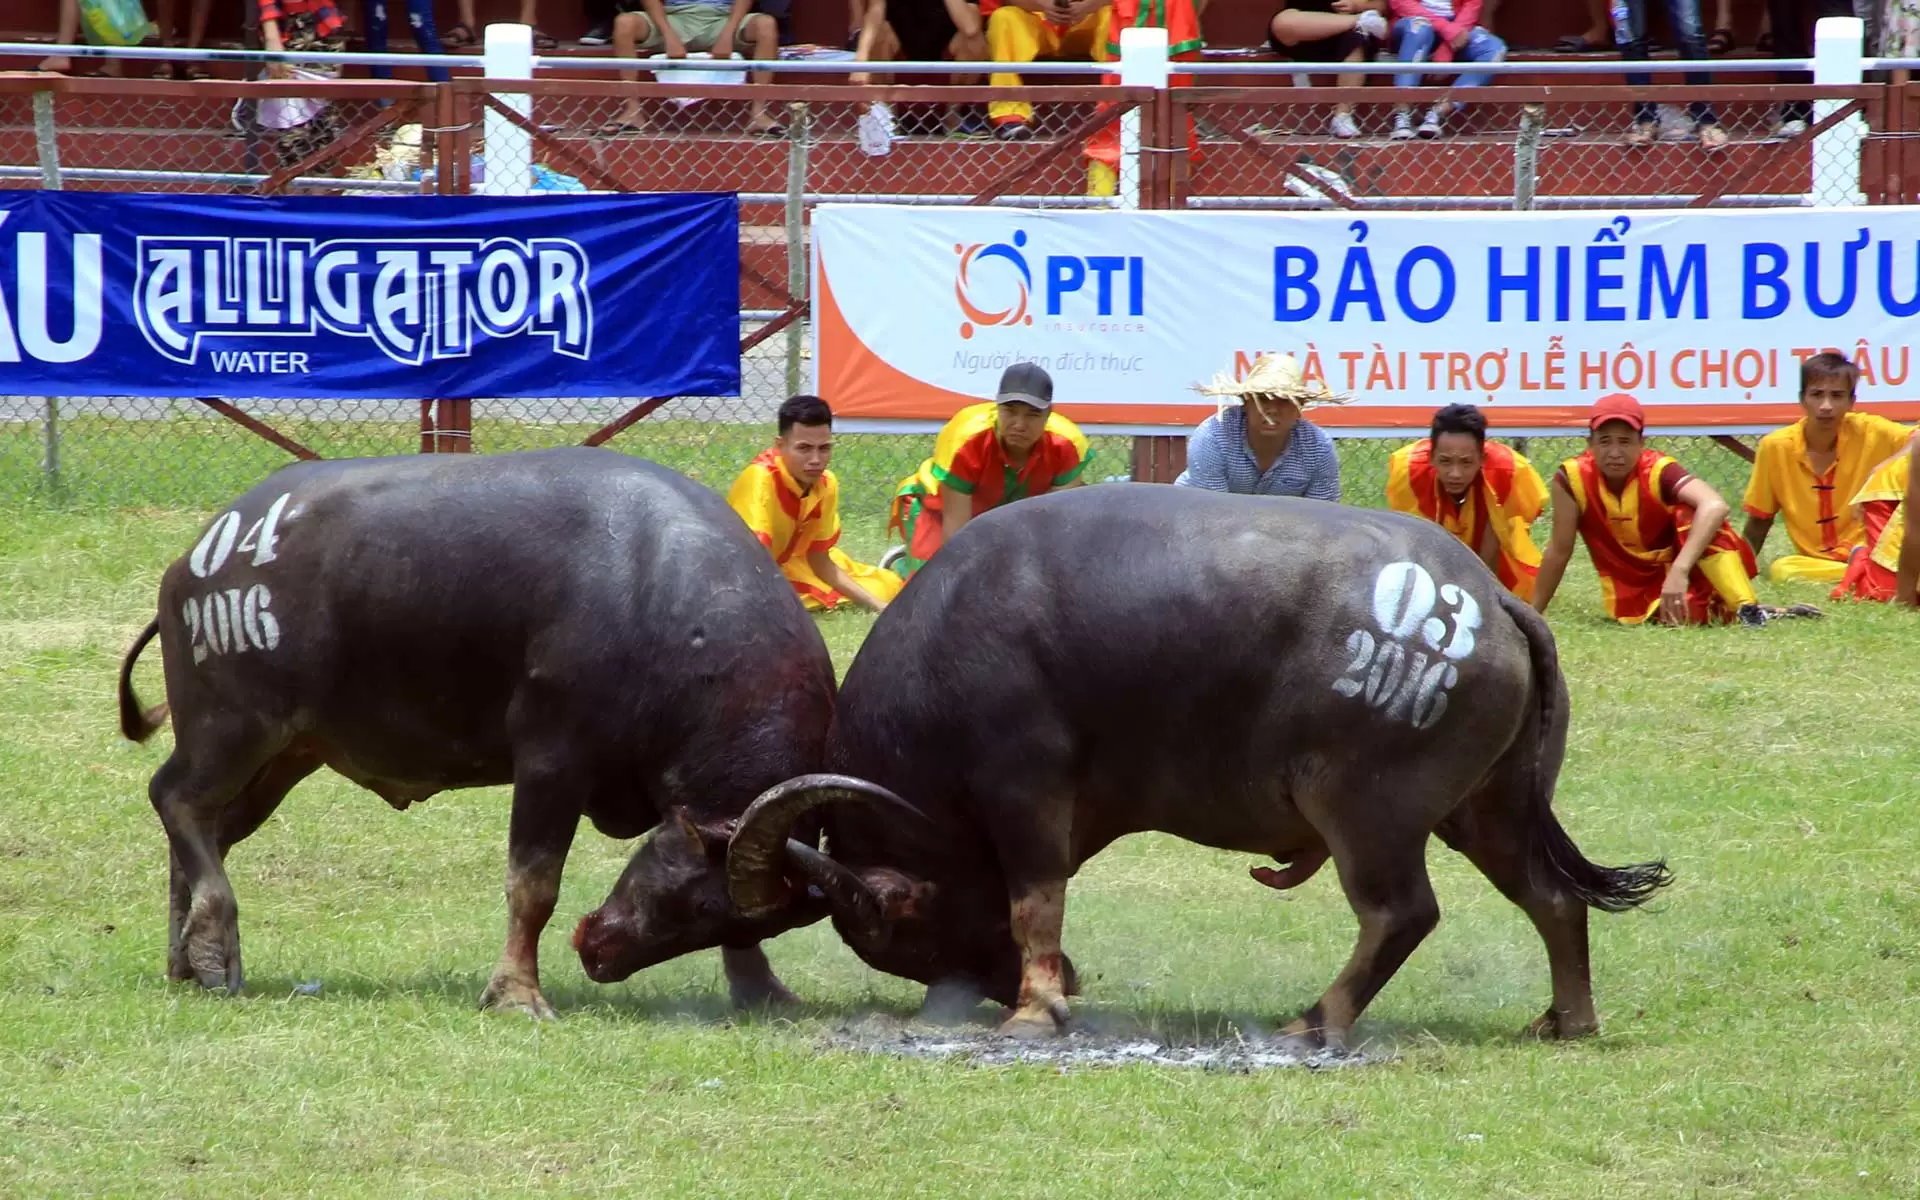 Buffalo Fighting Festival in Phu Ninh (Phu Tho)